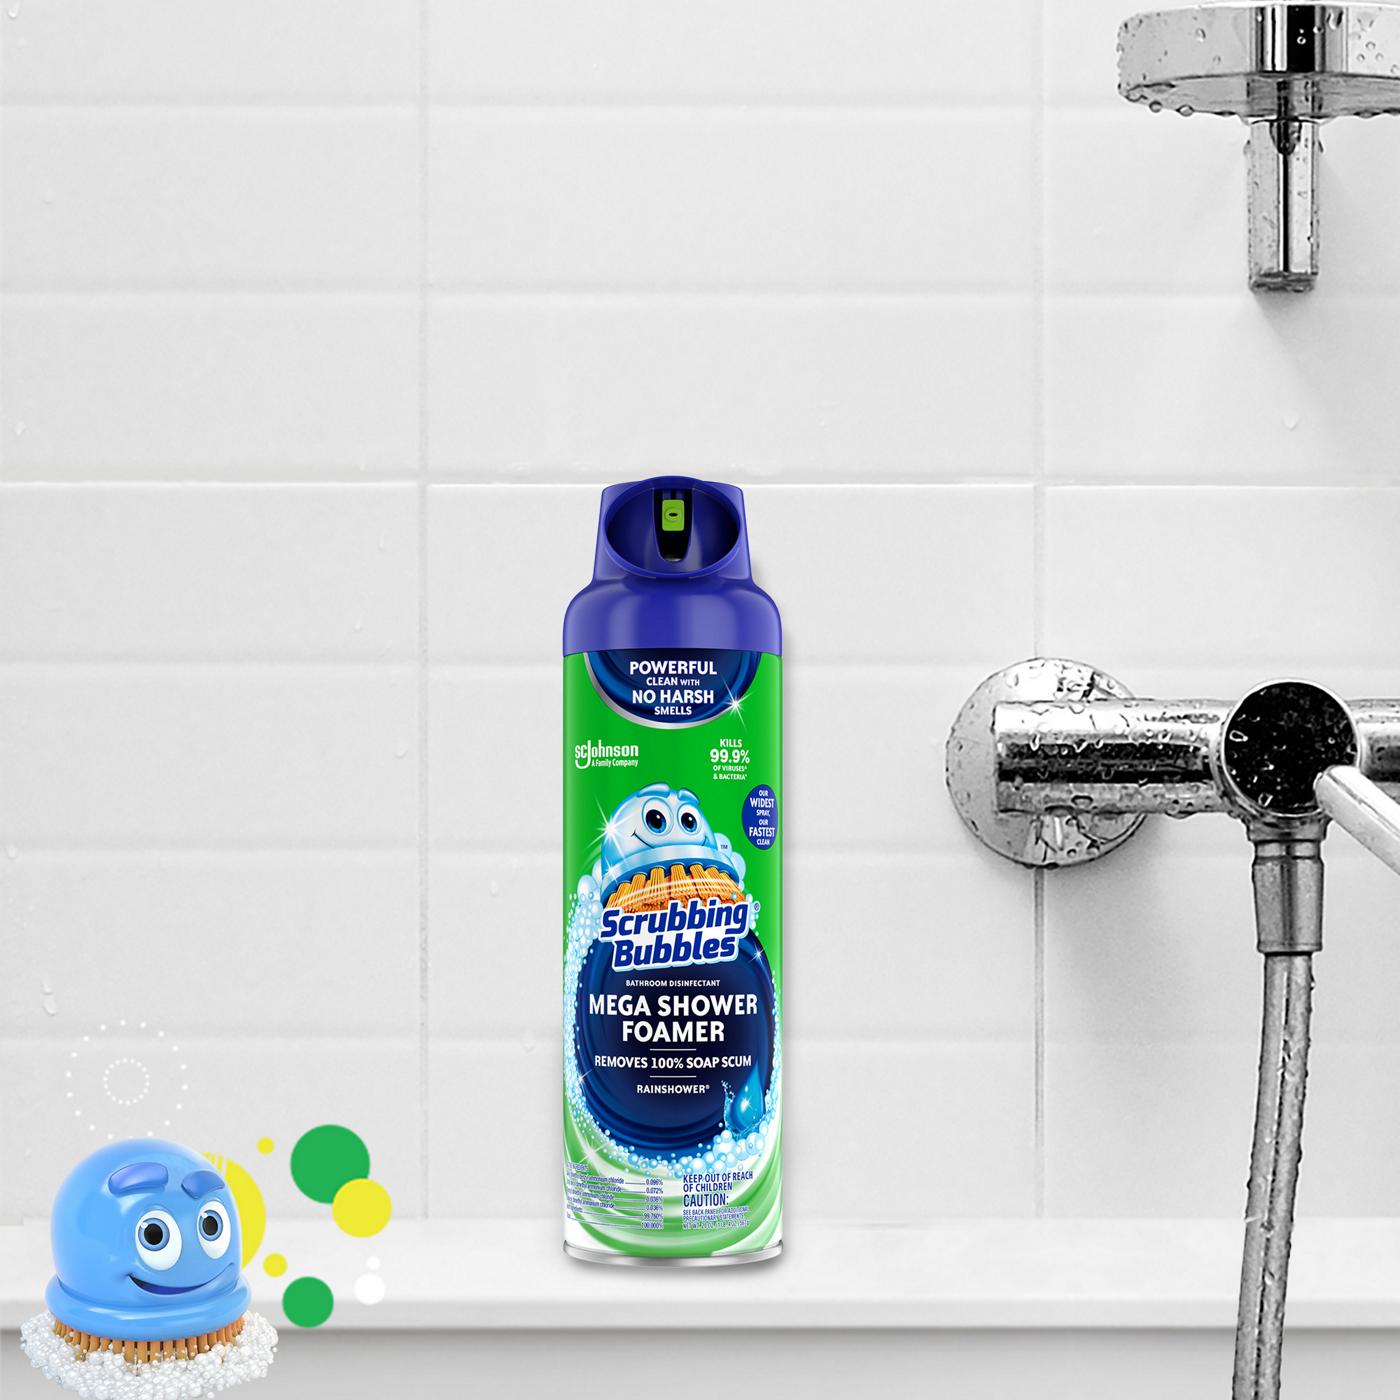 Scrubbing Bubbles Mega Shower Foamer Bathroom Cleaner; image 8 of 9